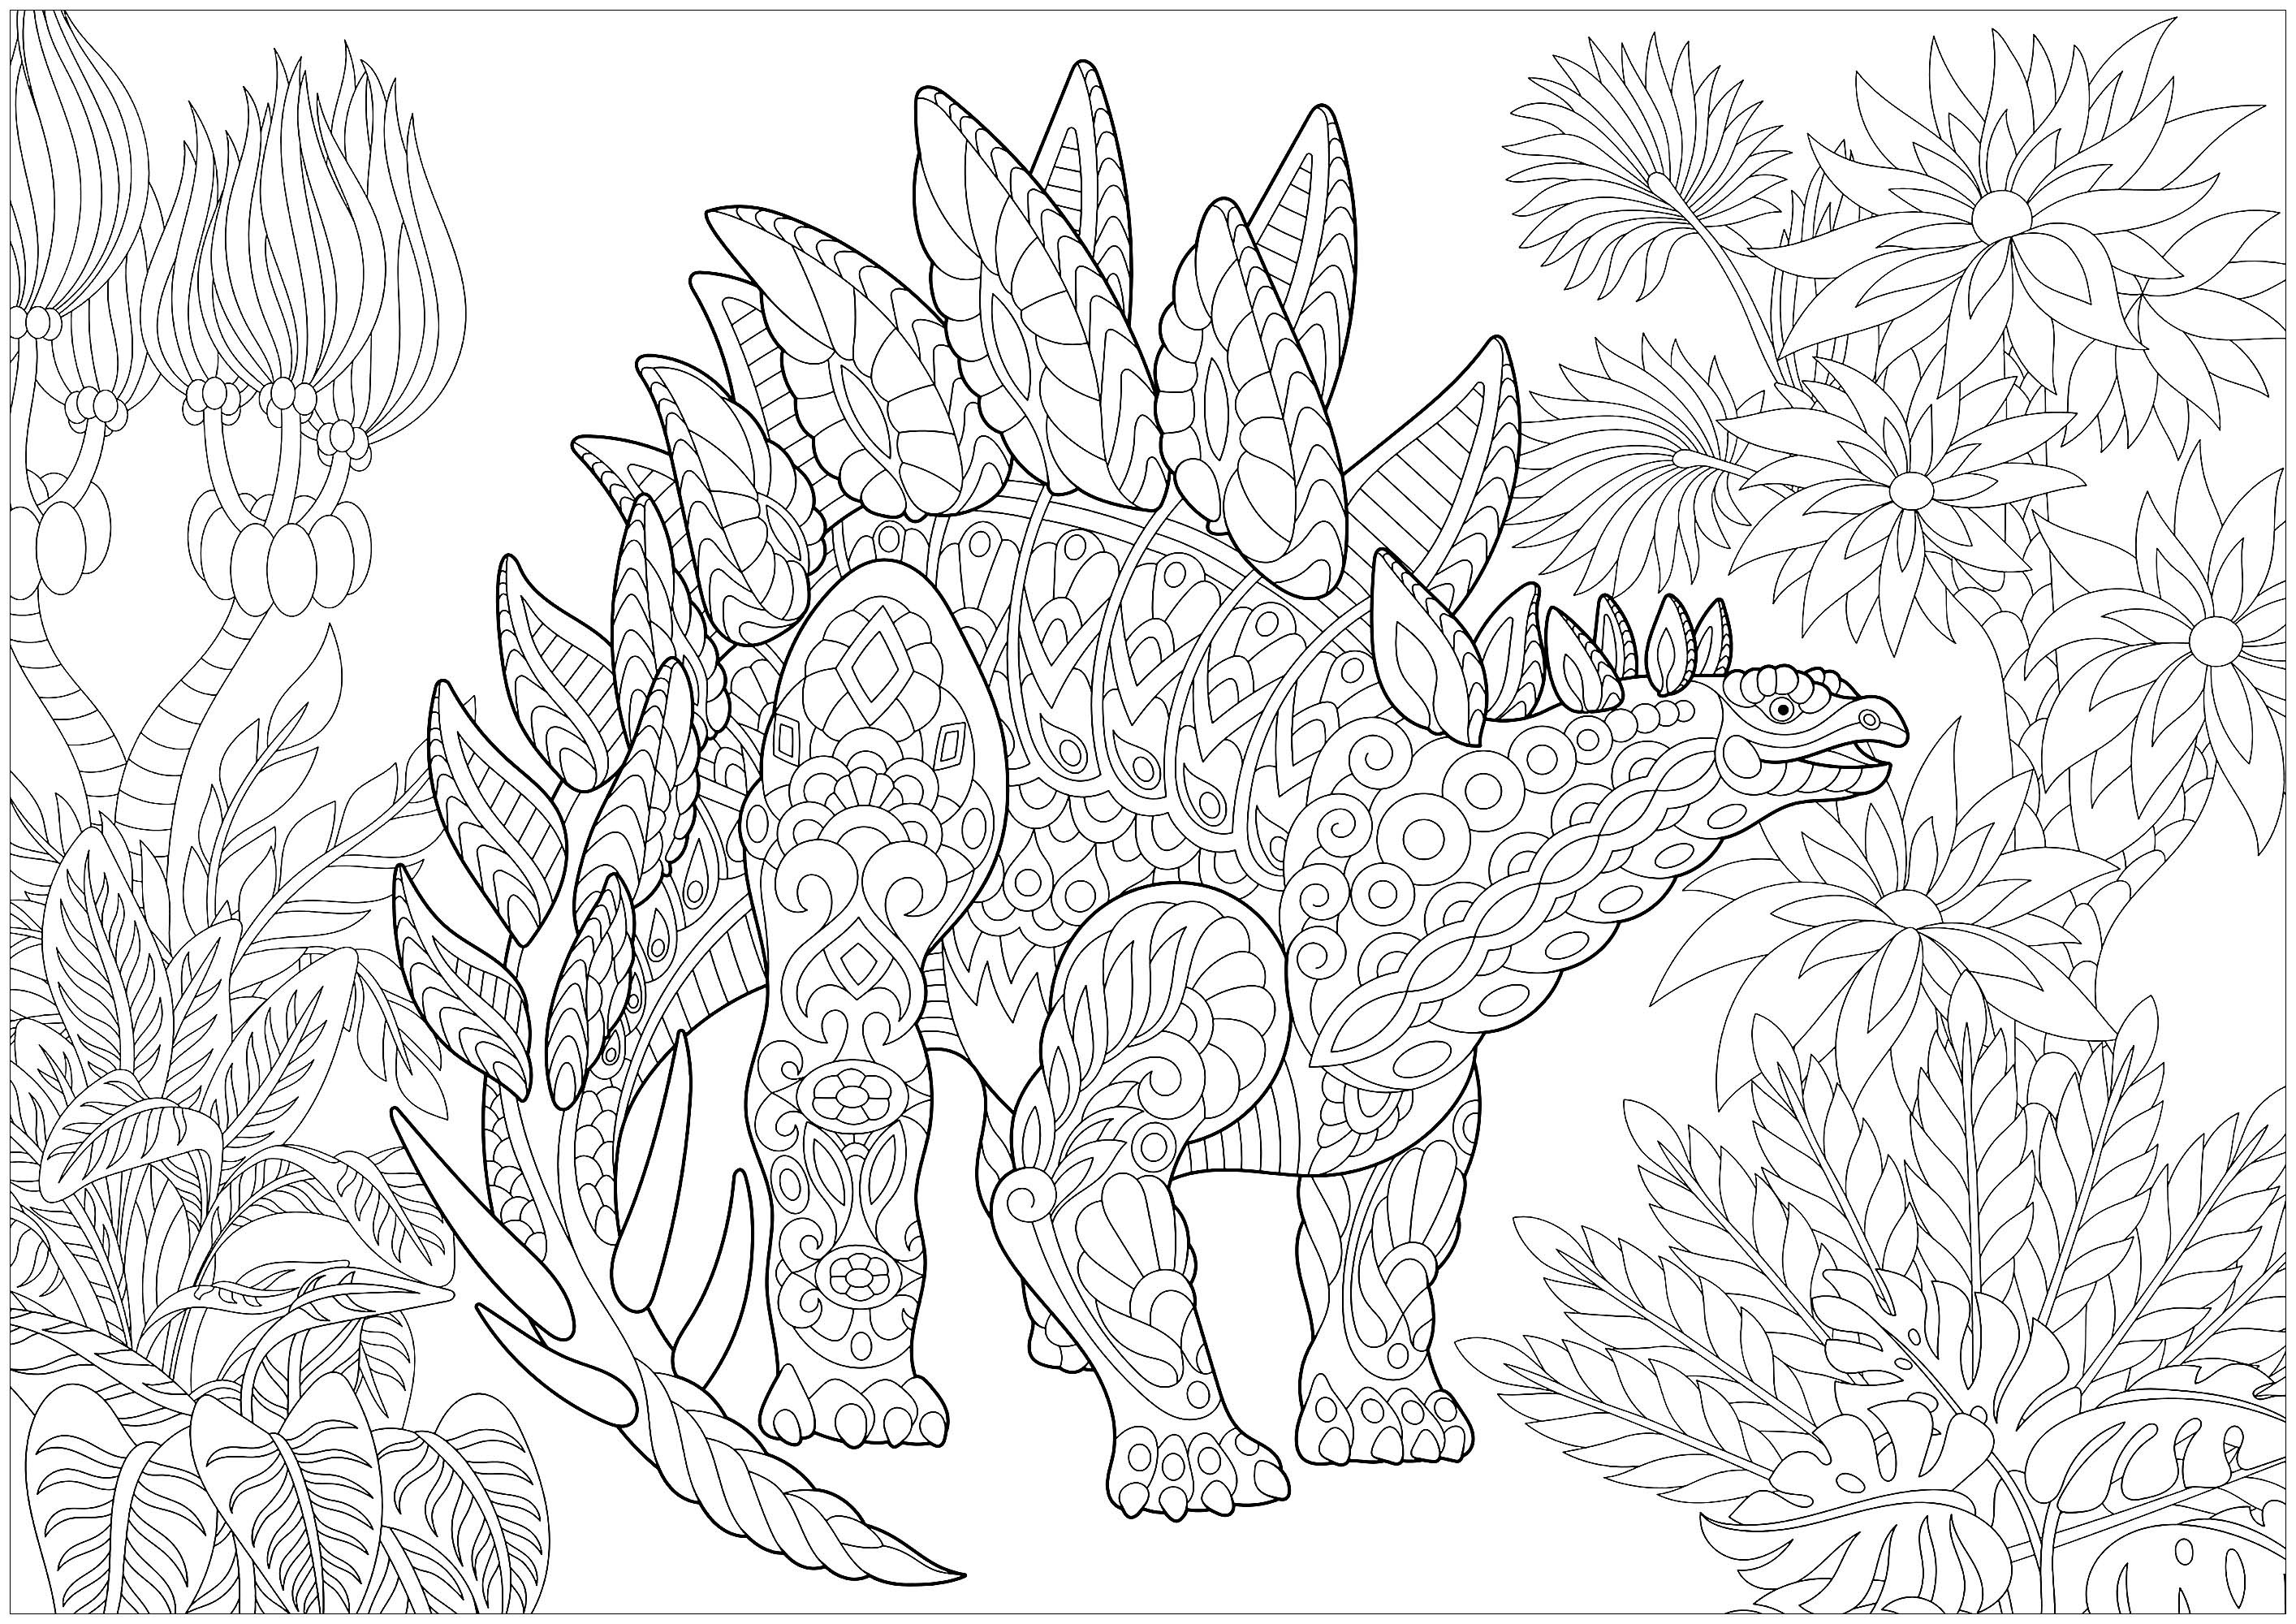 Dinossauro simples para colorir - Imprimir Desenhos